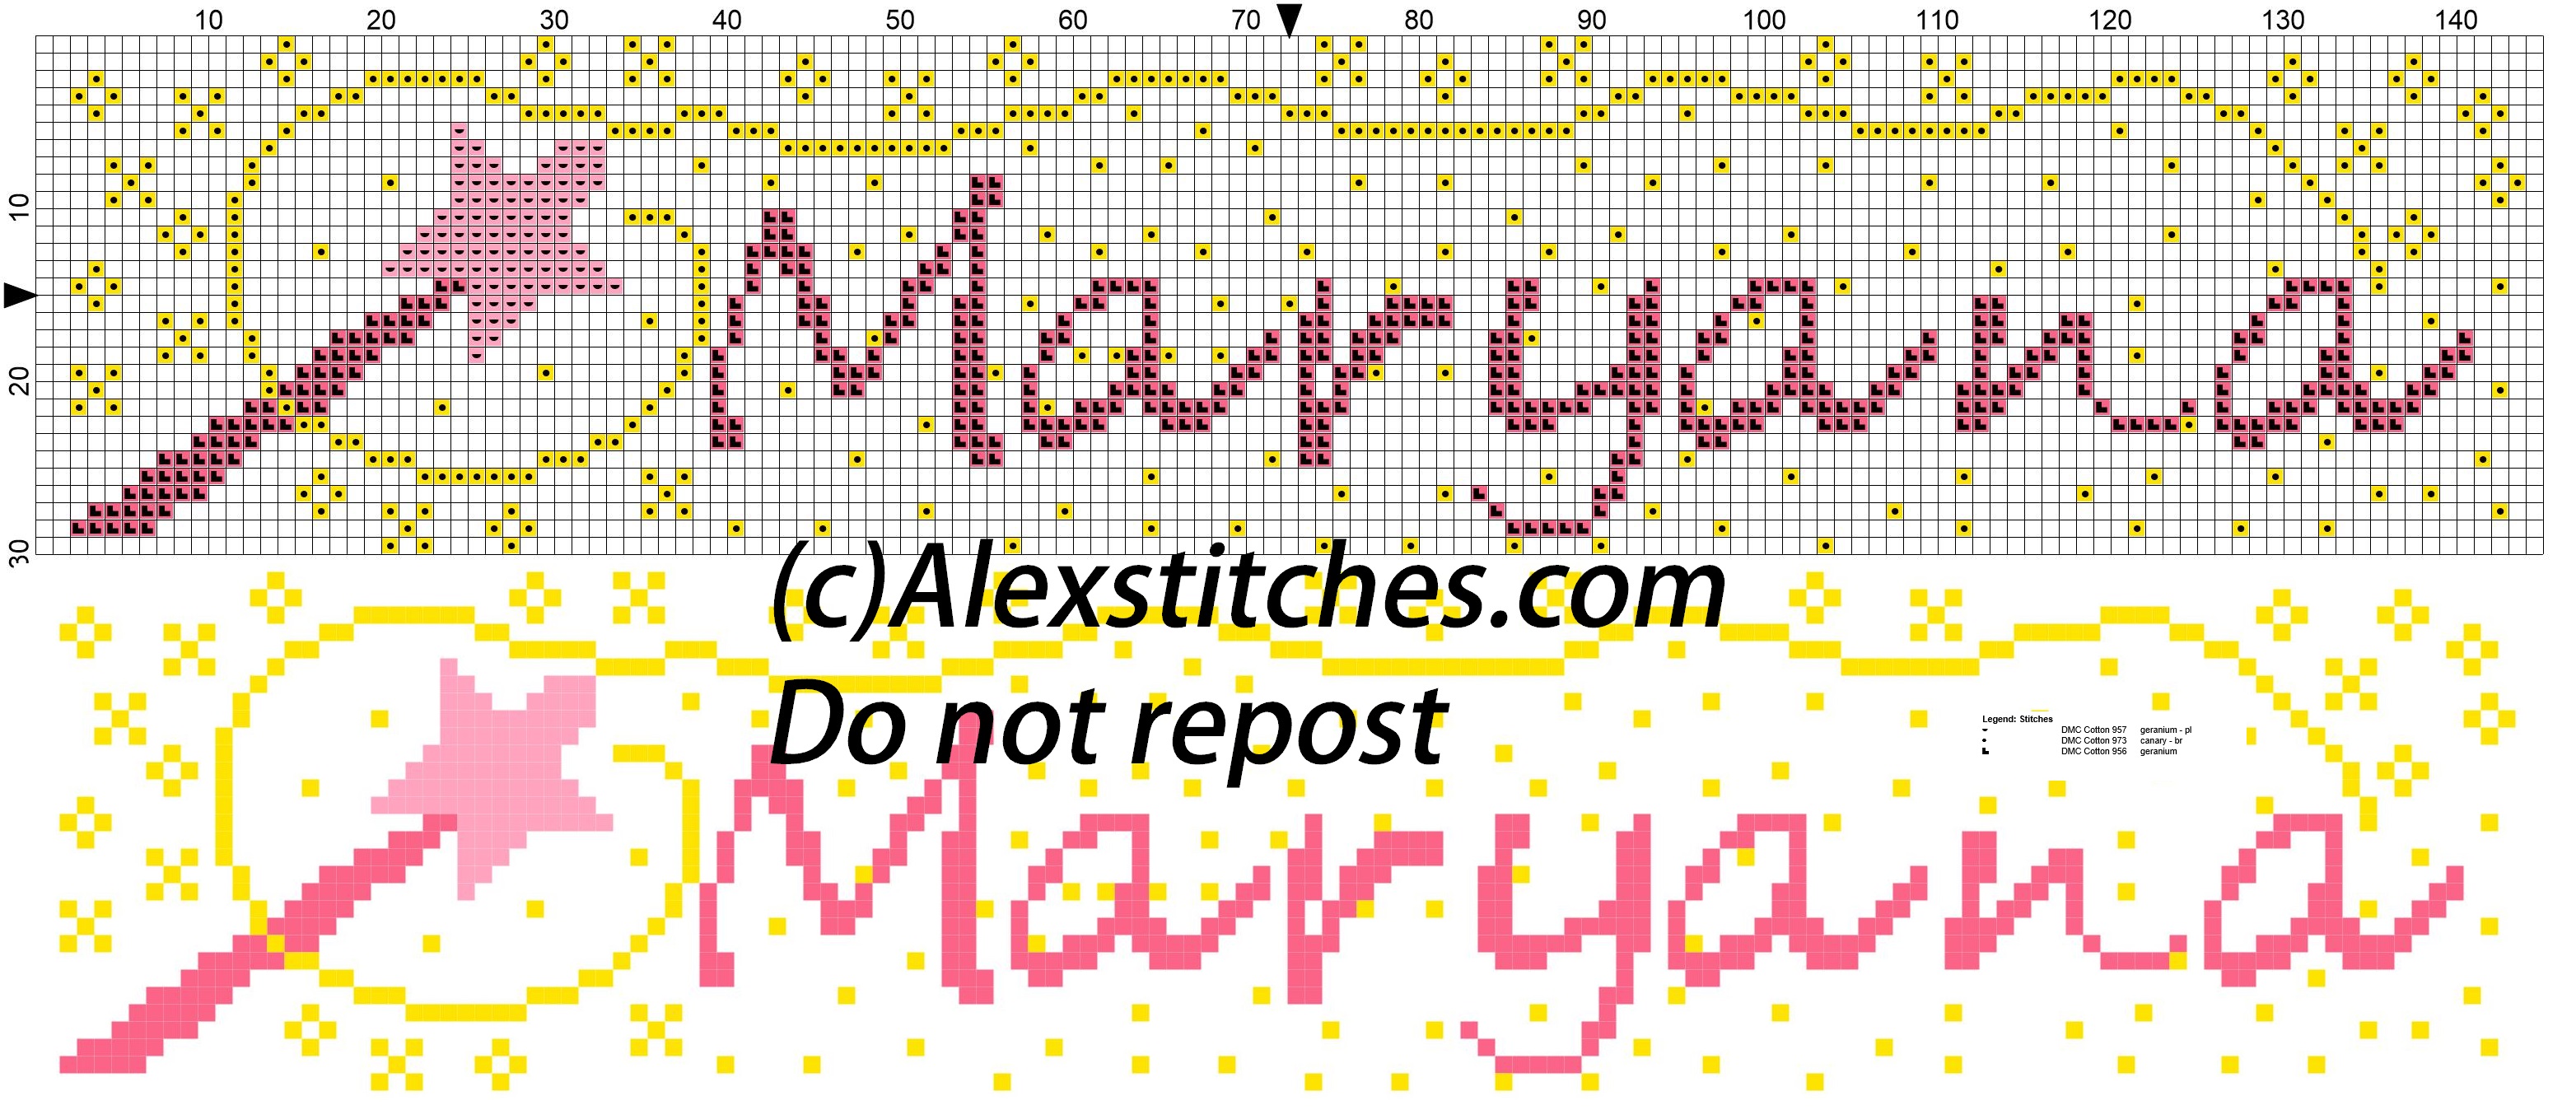 Maryana name with magic wand